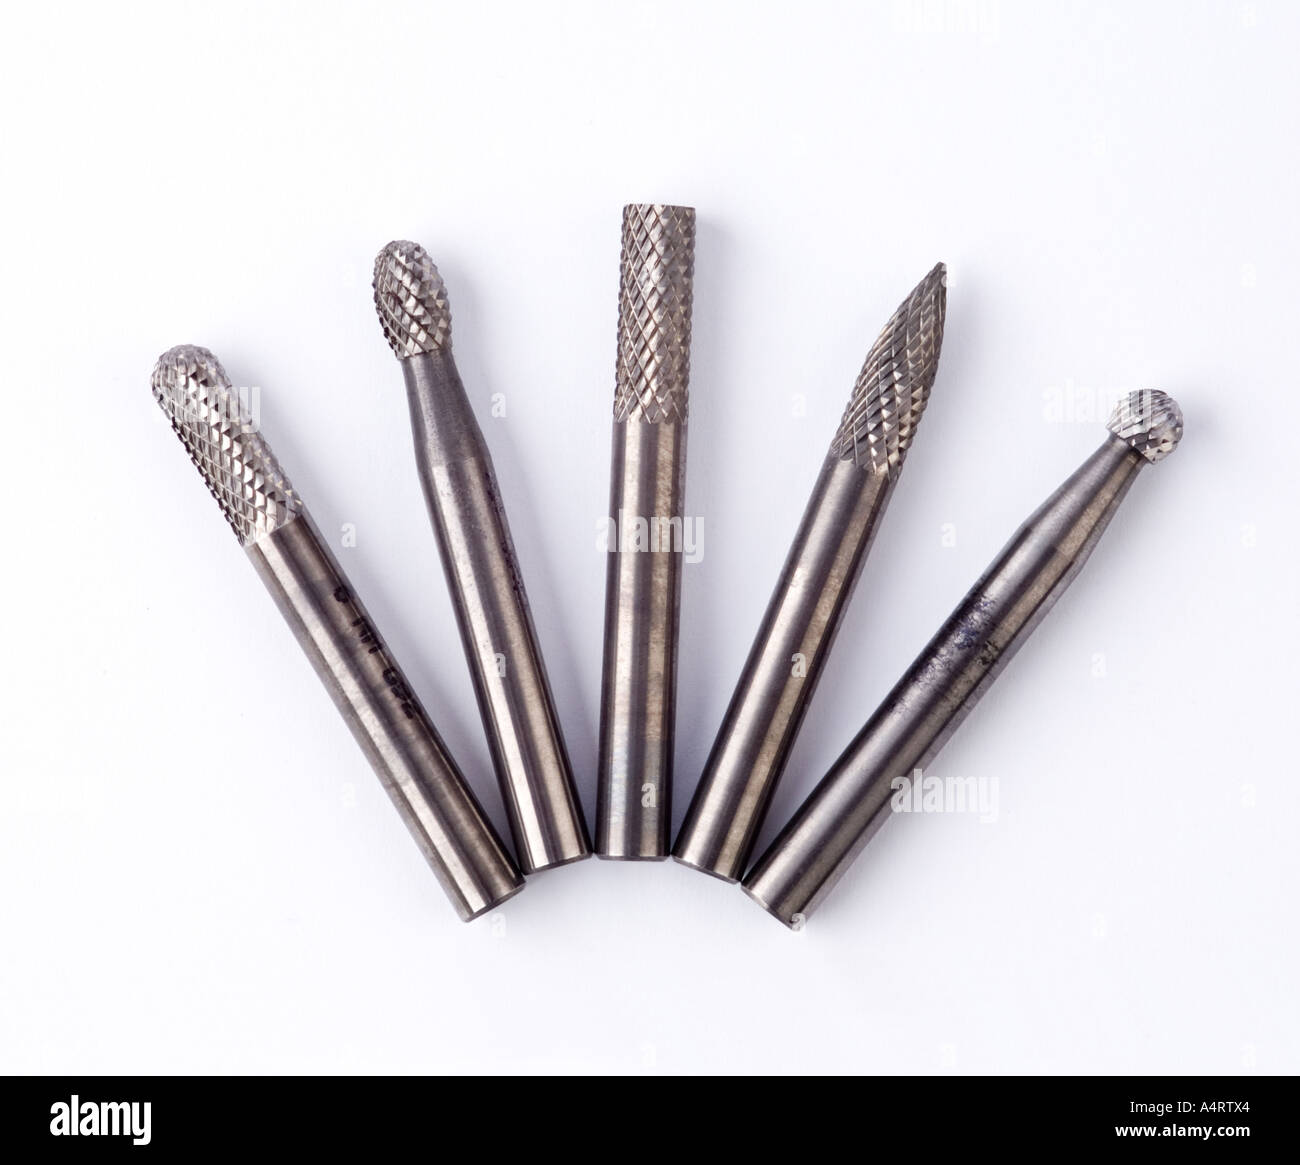 set of tungsten carbide drills / burrs Stock Photo